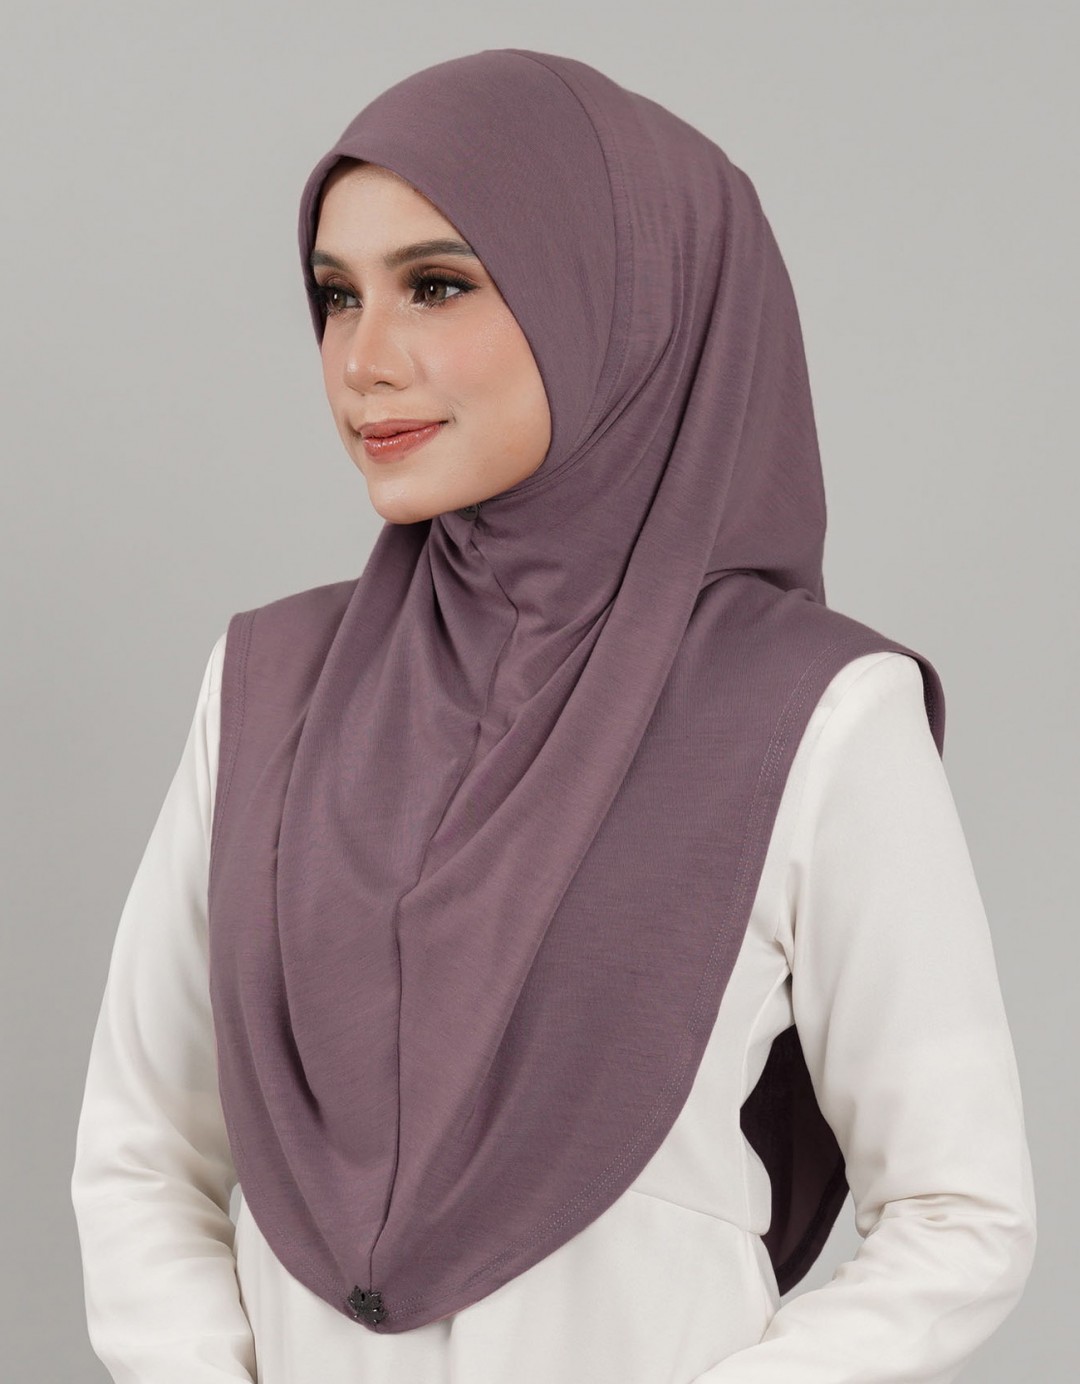 Express Hijab Damia Plain - 02 Plum